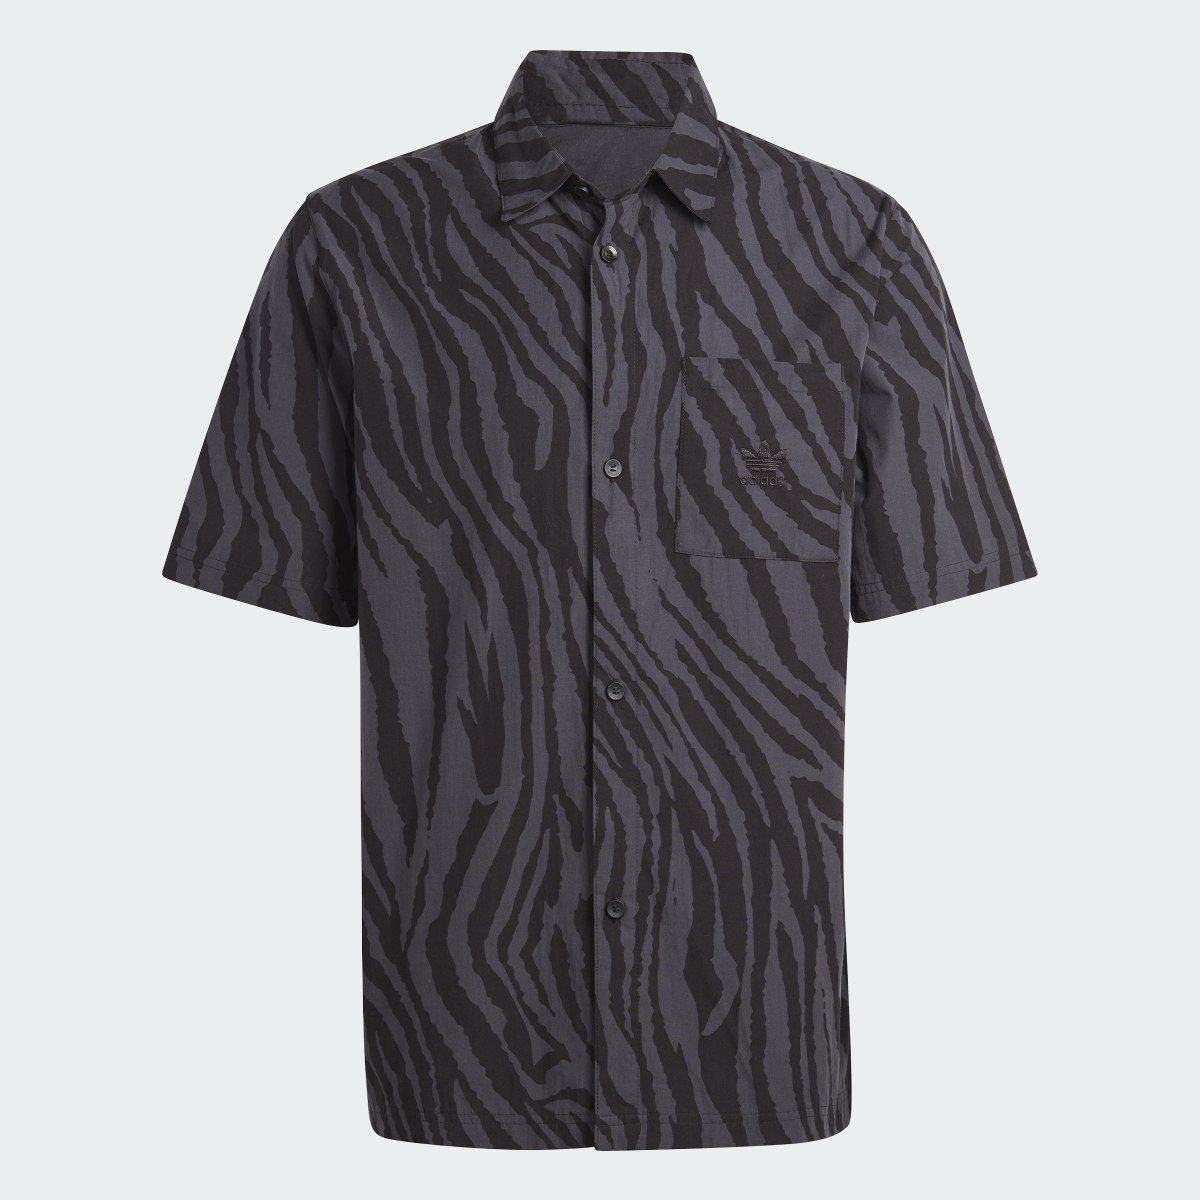 Adidas Graphics Animal Short Sleeve Shirt. 5